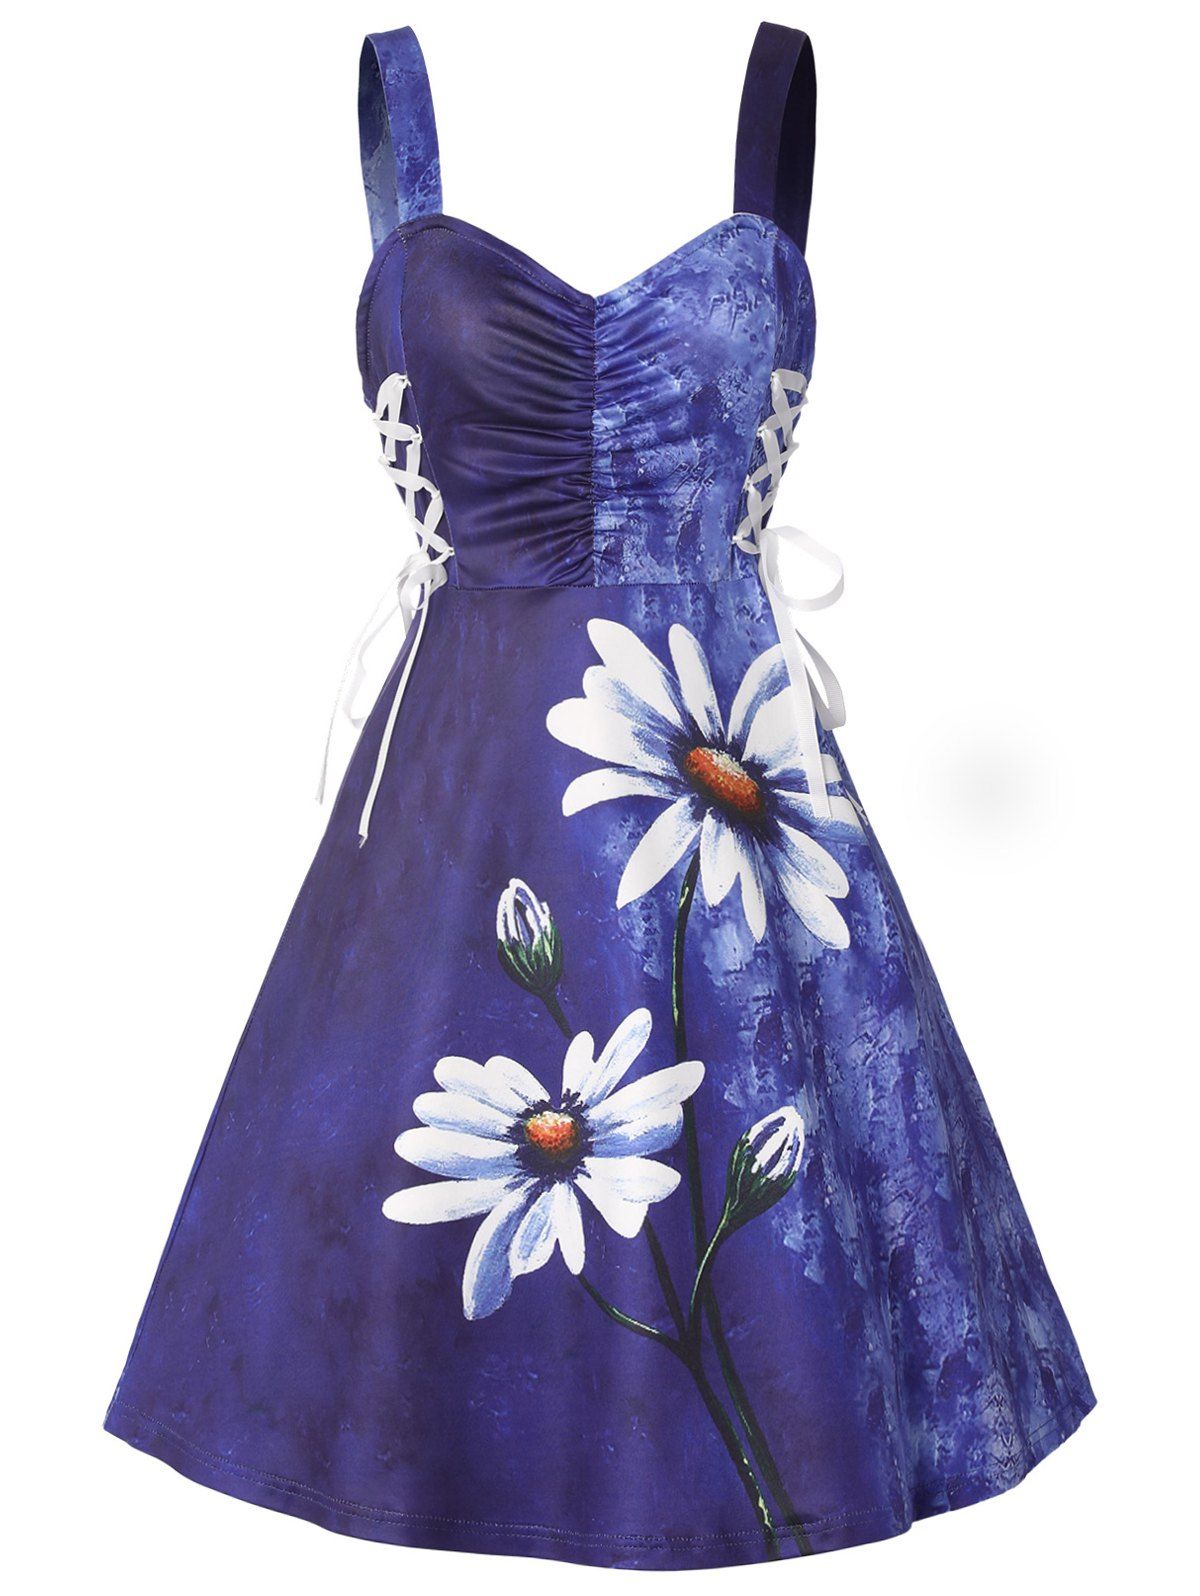 Flower Print Lace Up Tie Dye Ruched Mini Dress - LIGHT BLUE M